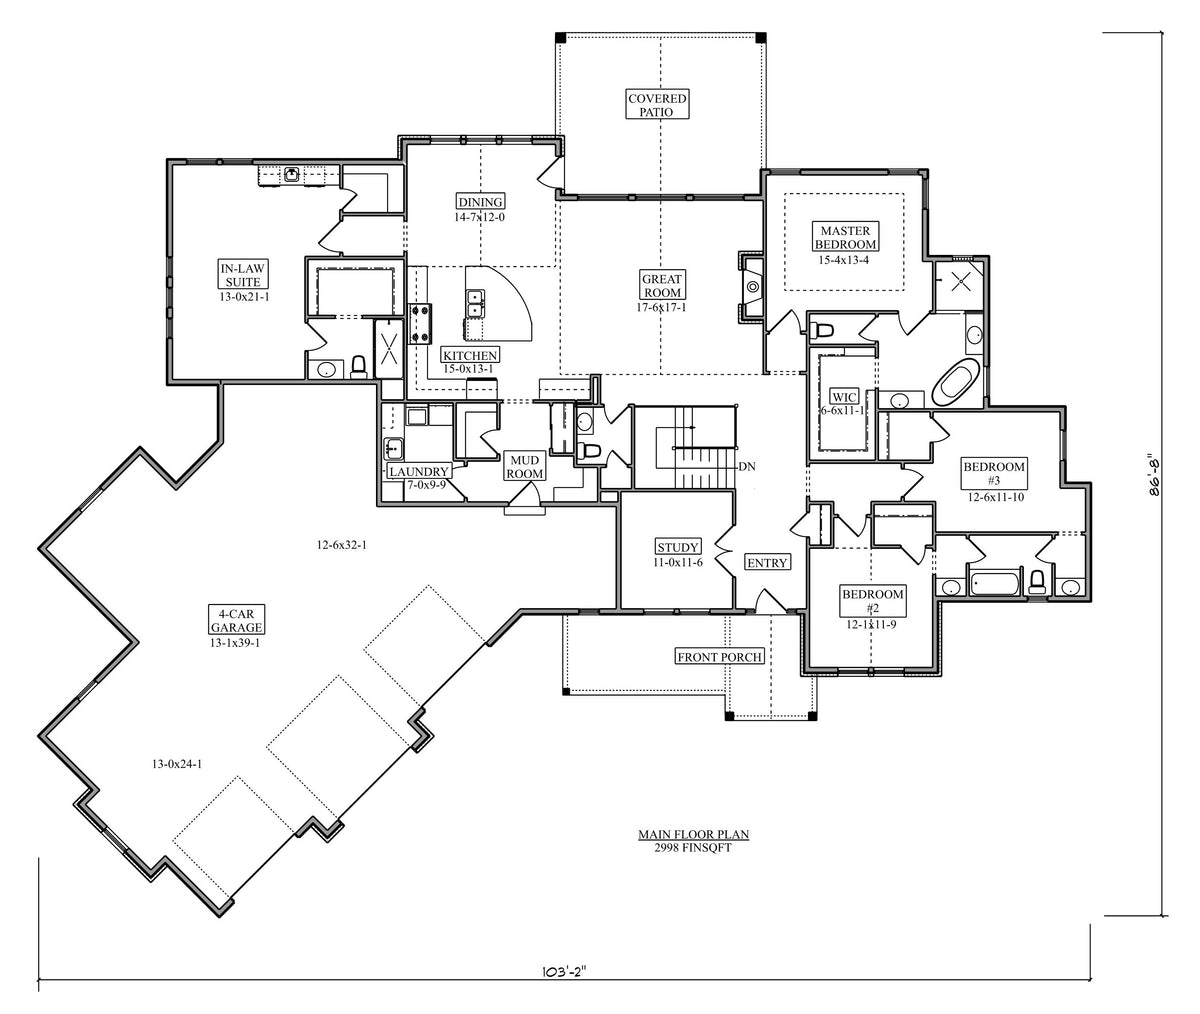 Mendoza First Floor Plan